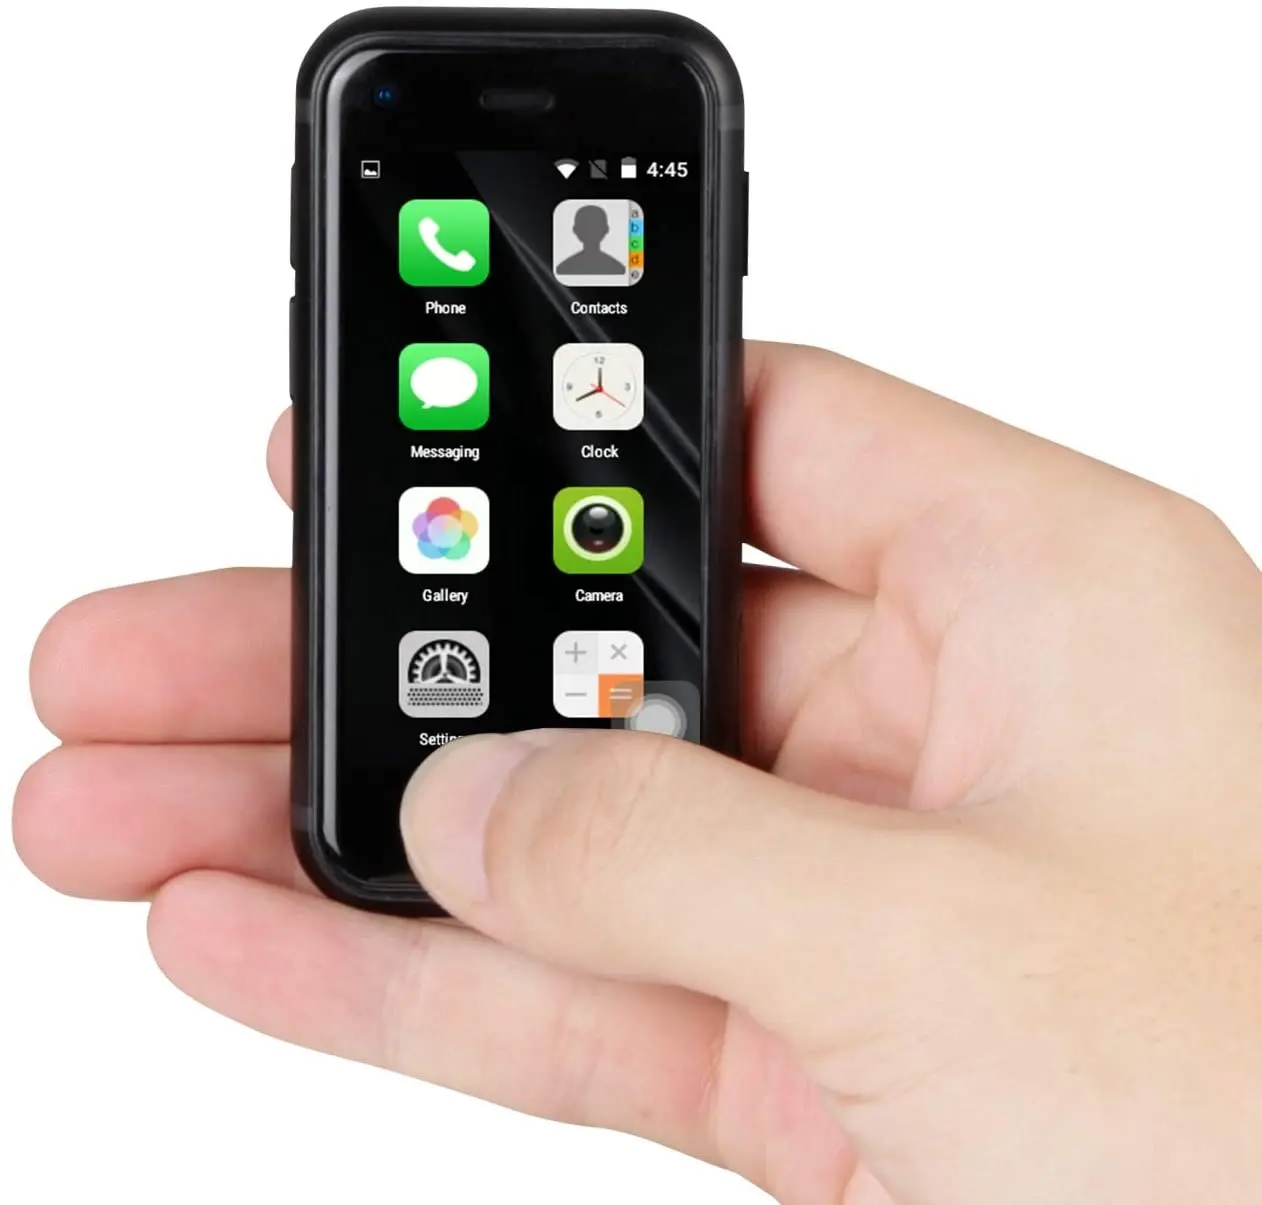 मिनी स्मार्टफोन बच्चे फोन Sudroid दुनिया की सबसे छोटी सेल फोन 2.5 इंच एंड्रॉयड छोटे फोन ट्रैक्टर कोर 1G + 8G 5.0MP दोहरी